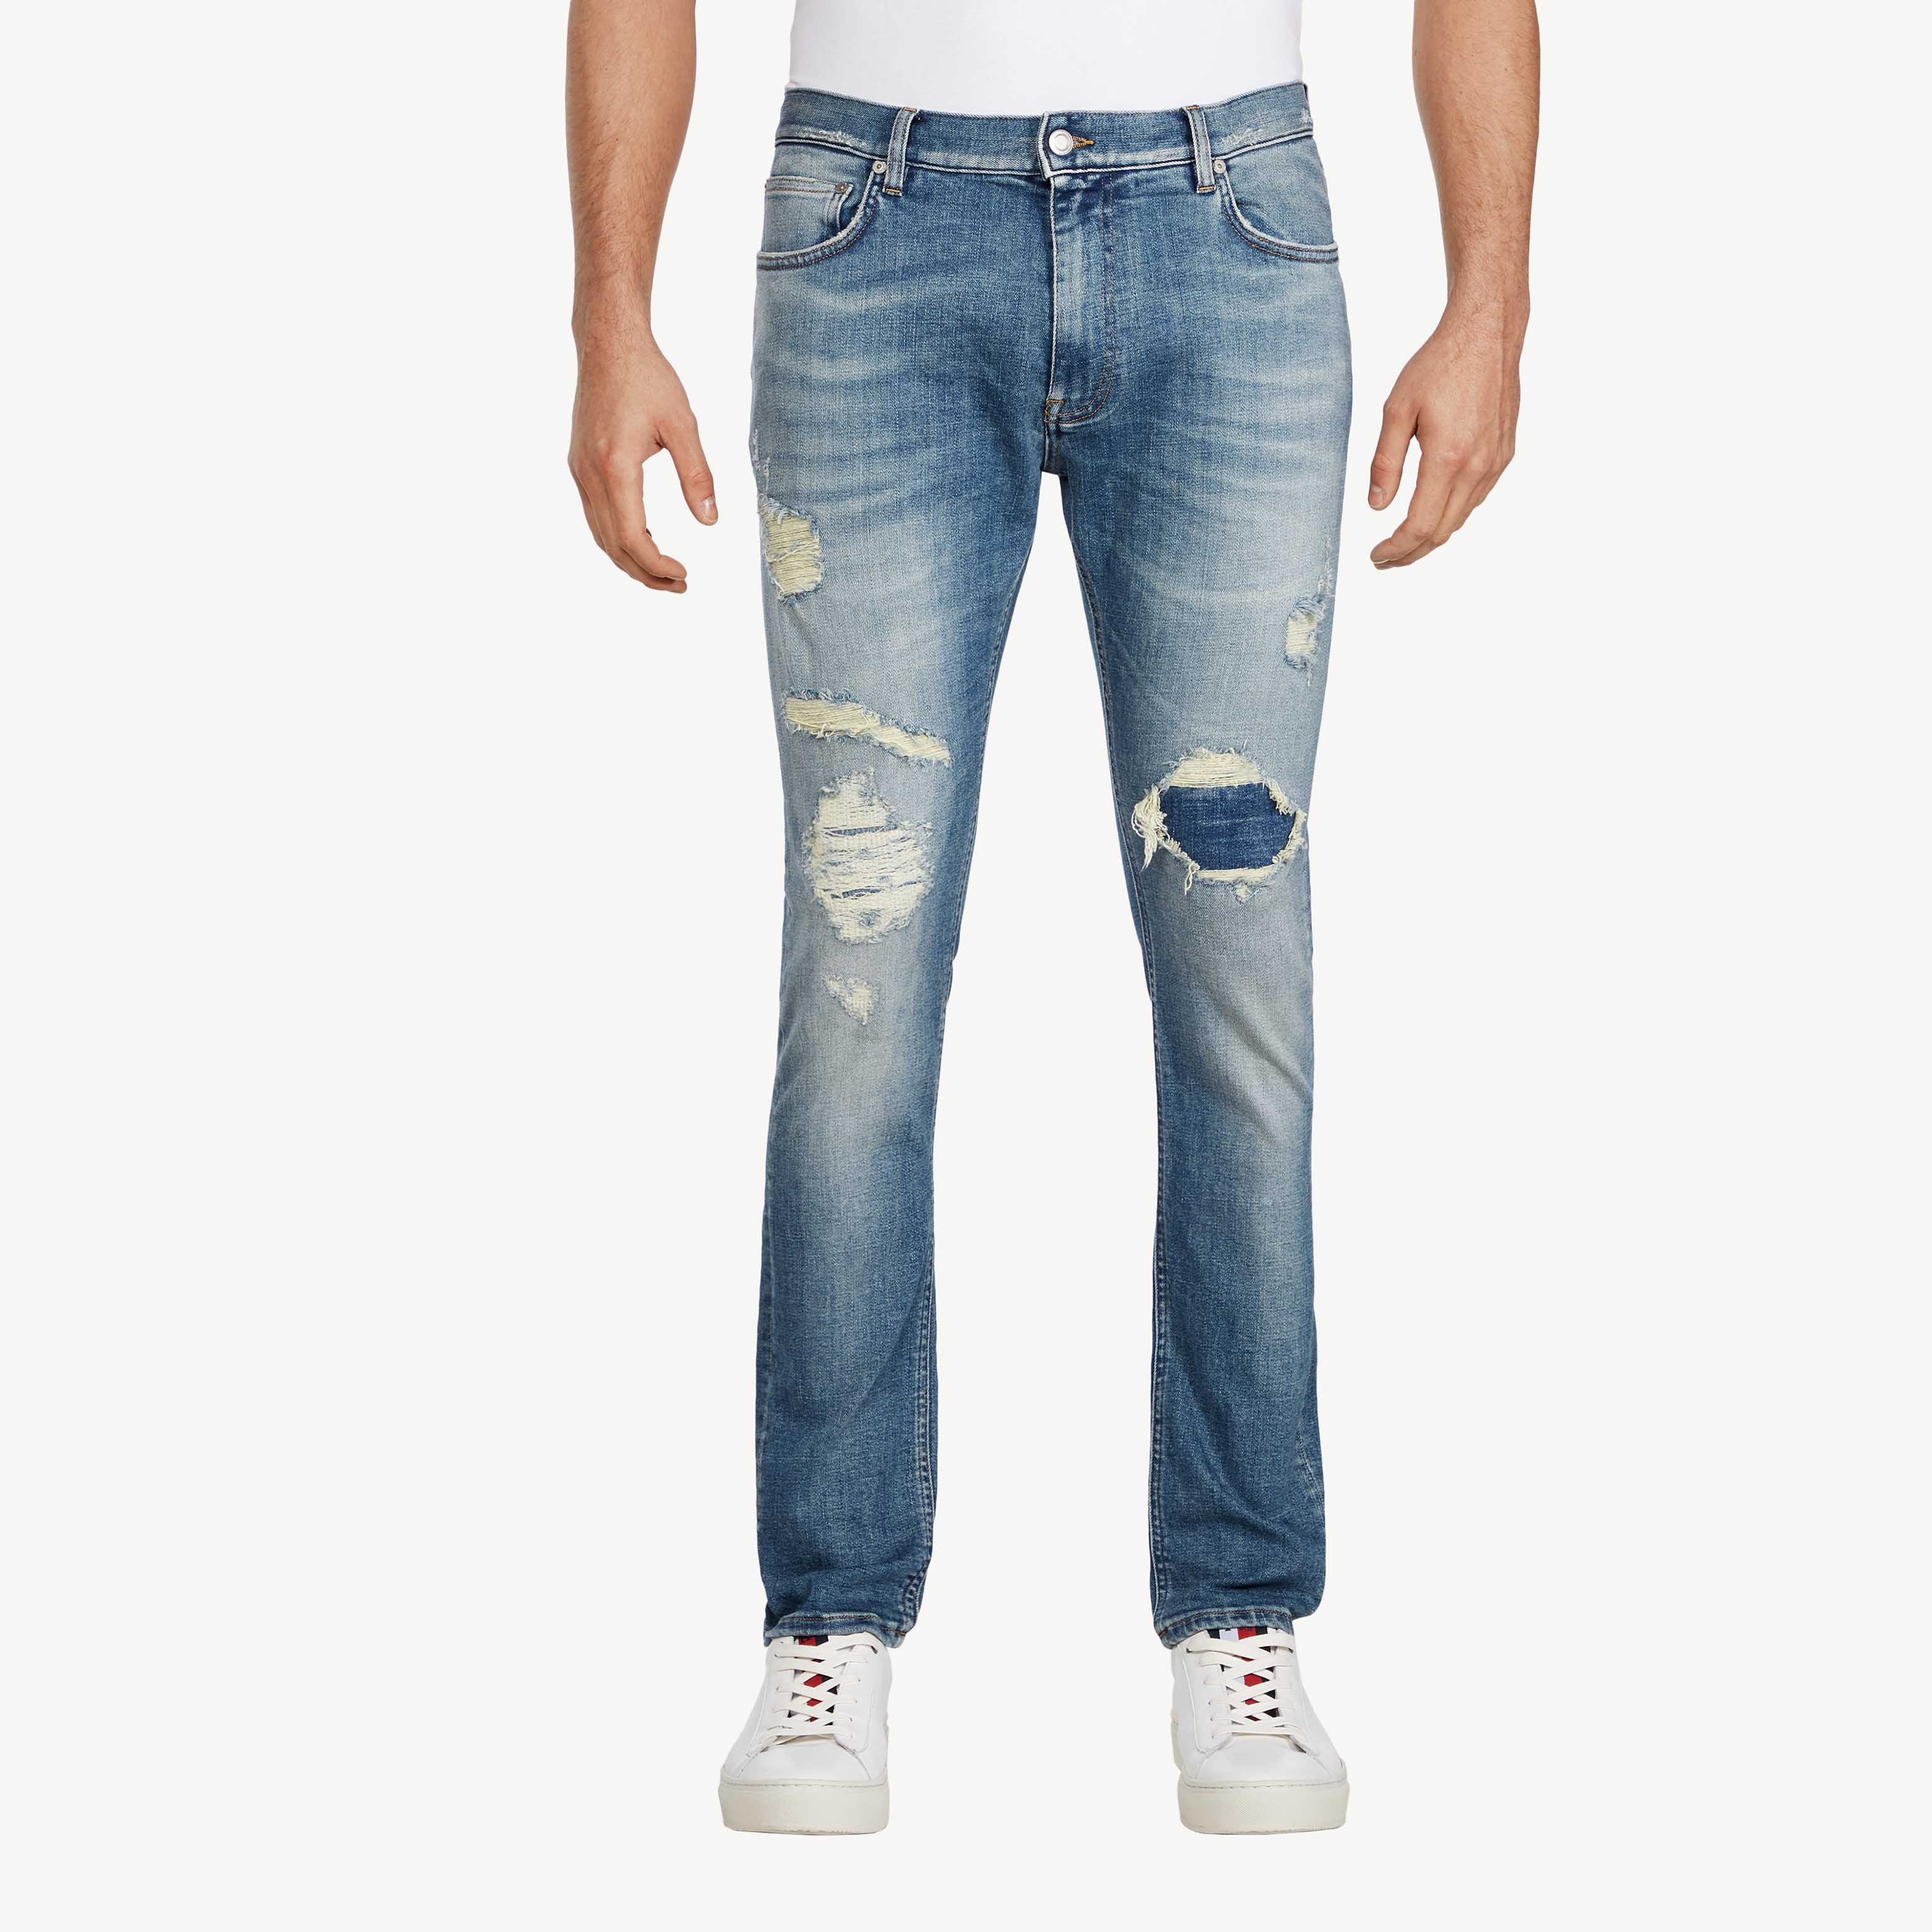 lewis hamilton distressed jeans